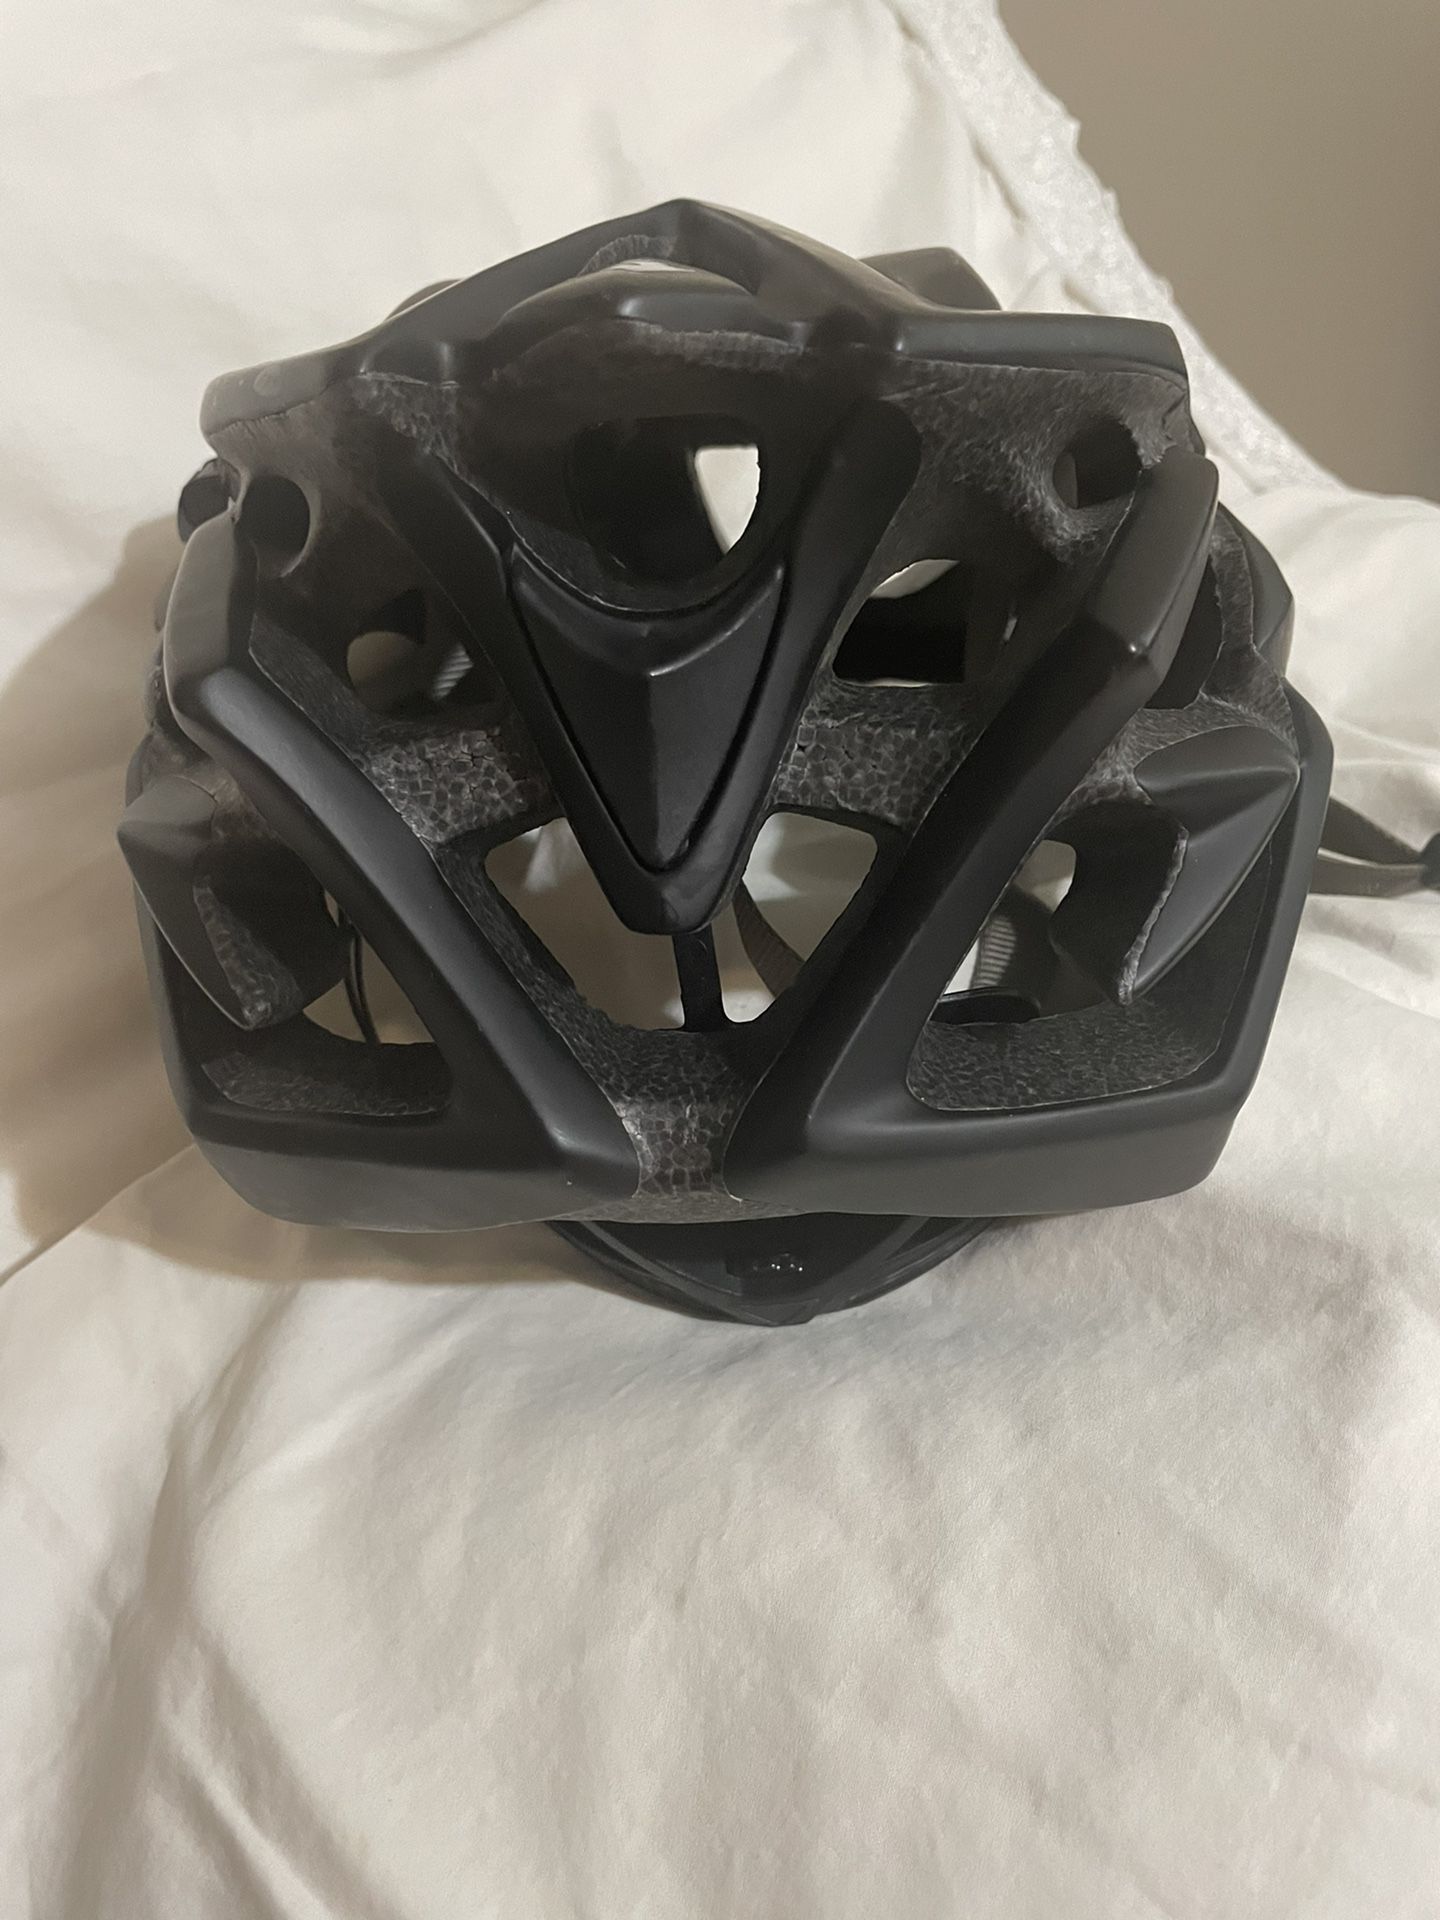 Scattante RAZZO Road Cycling Helmet  Bike  